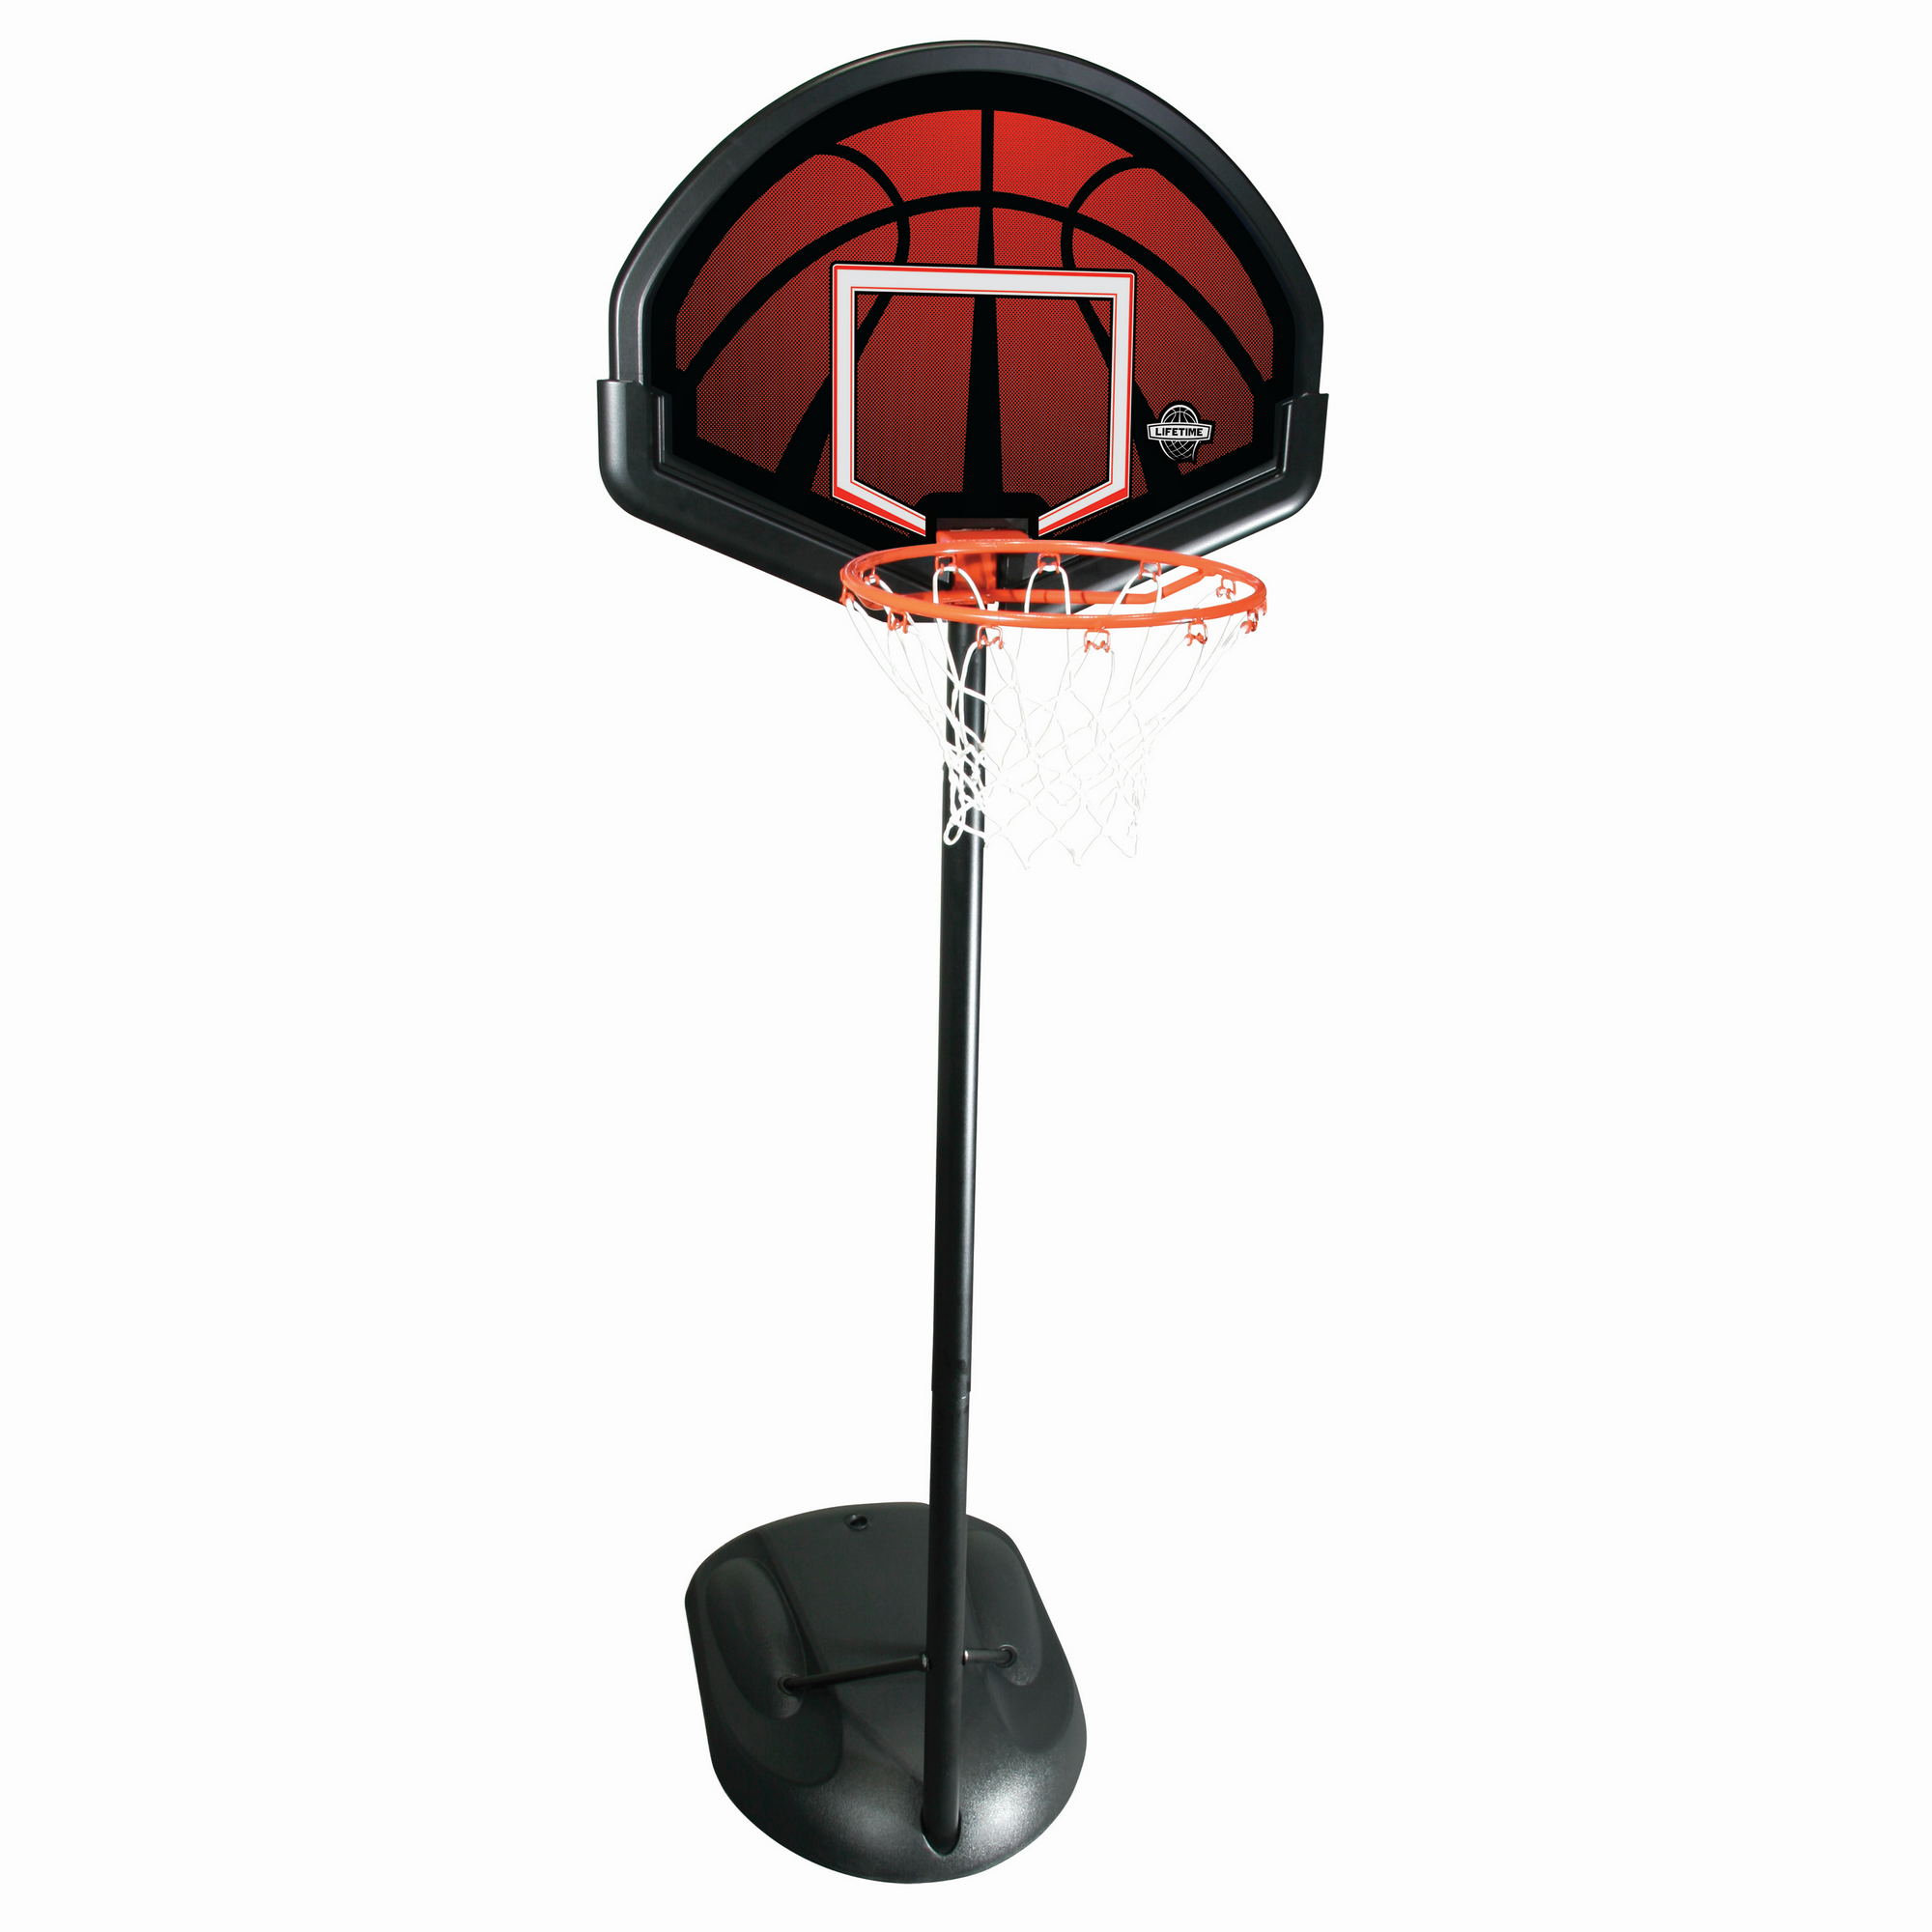 Basketballkorb 'Alabama' schwarz/rot mit Standfuss 81 x 225 cm + product picture